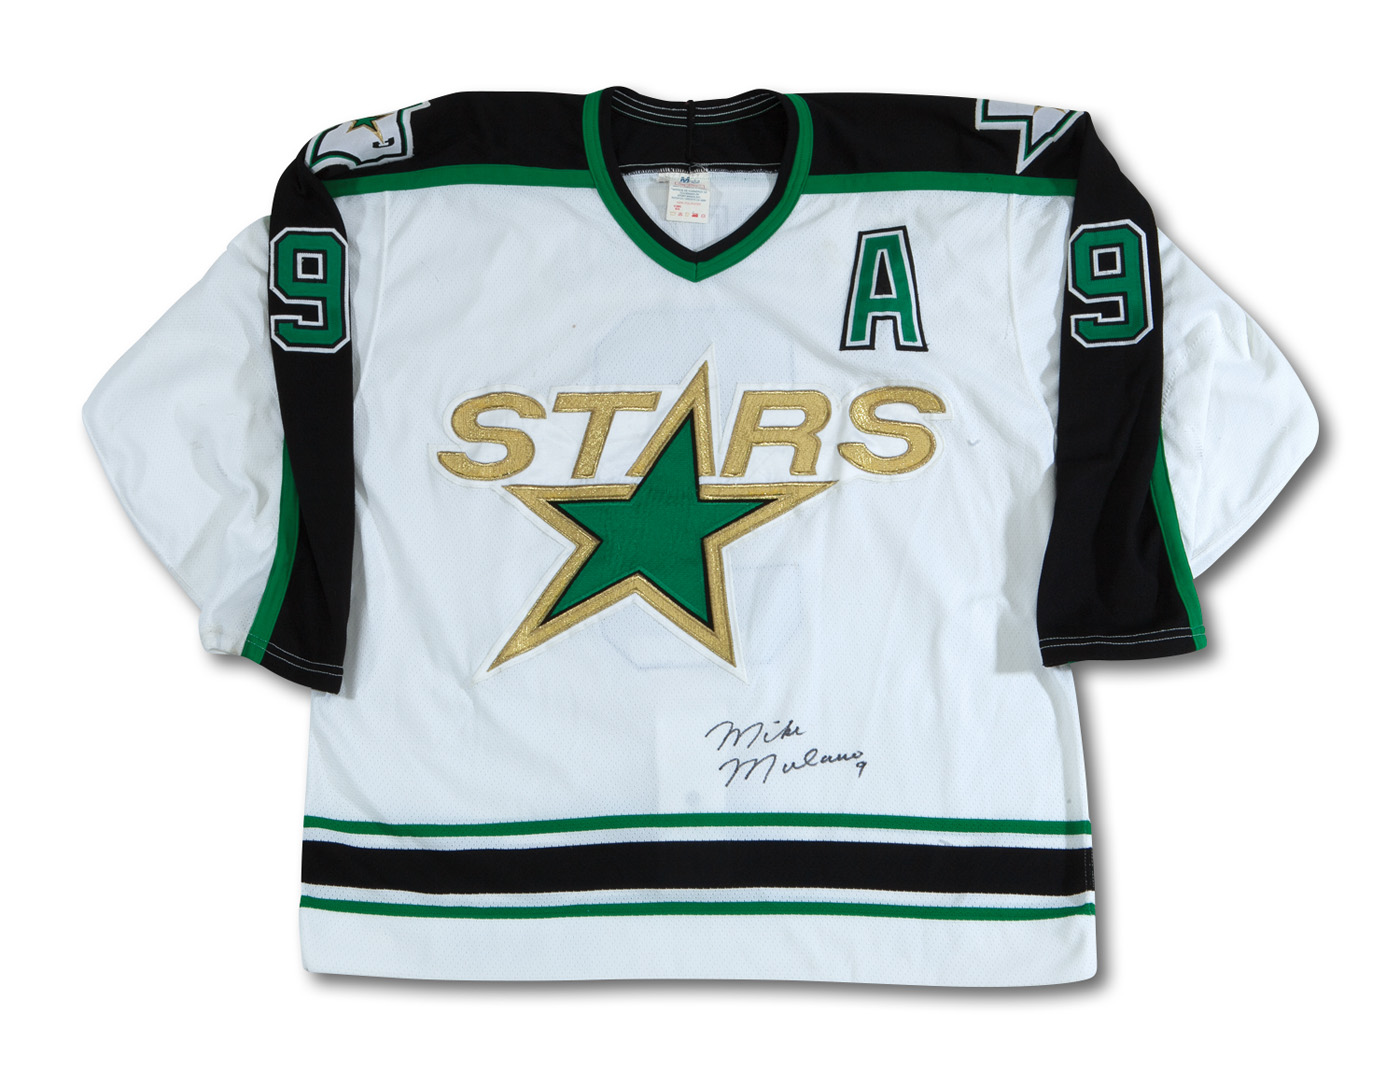 2009-10 Mike Modano Game Worn Dallas Stars Jersey. Hockey, Lot #13684